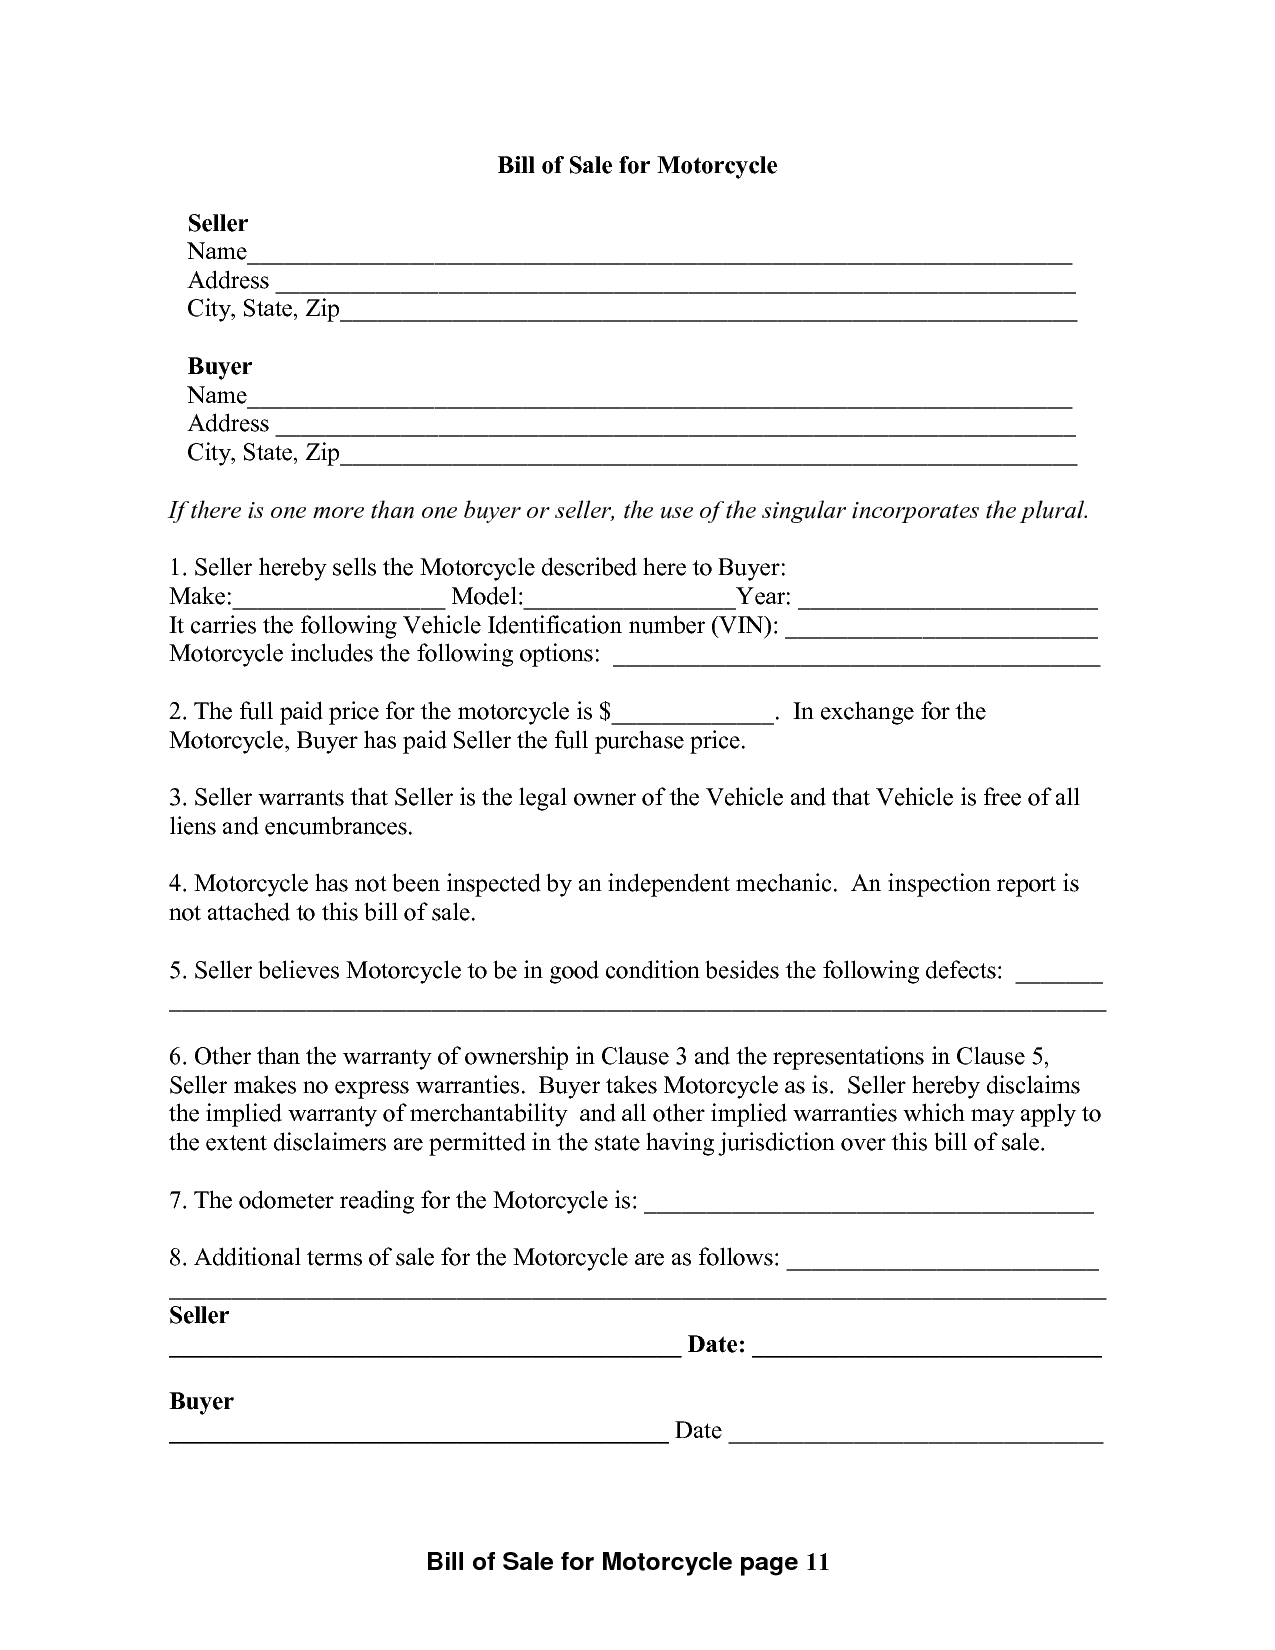 Atv bill of sale form template and atv bill of sale pdf